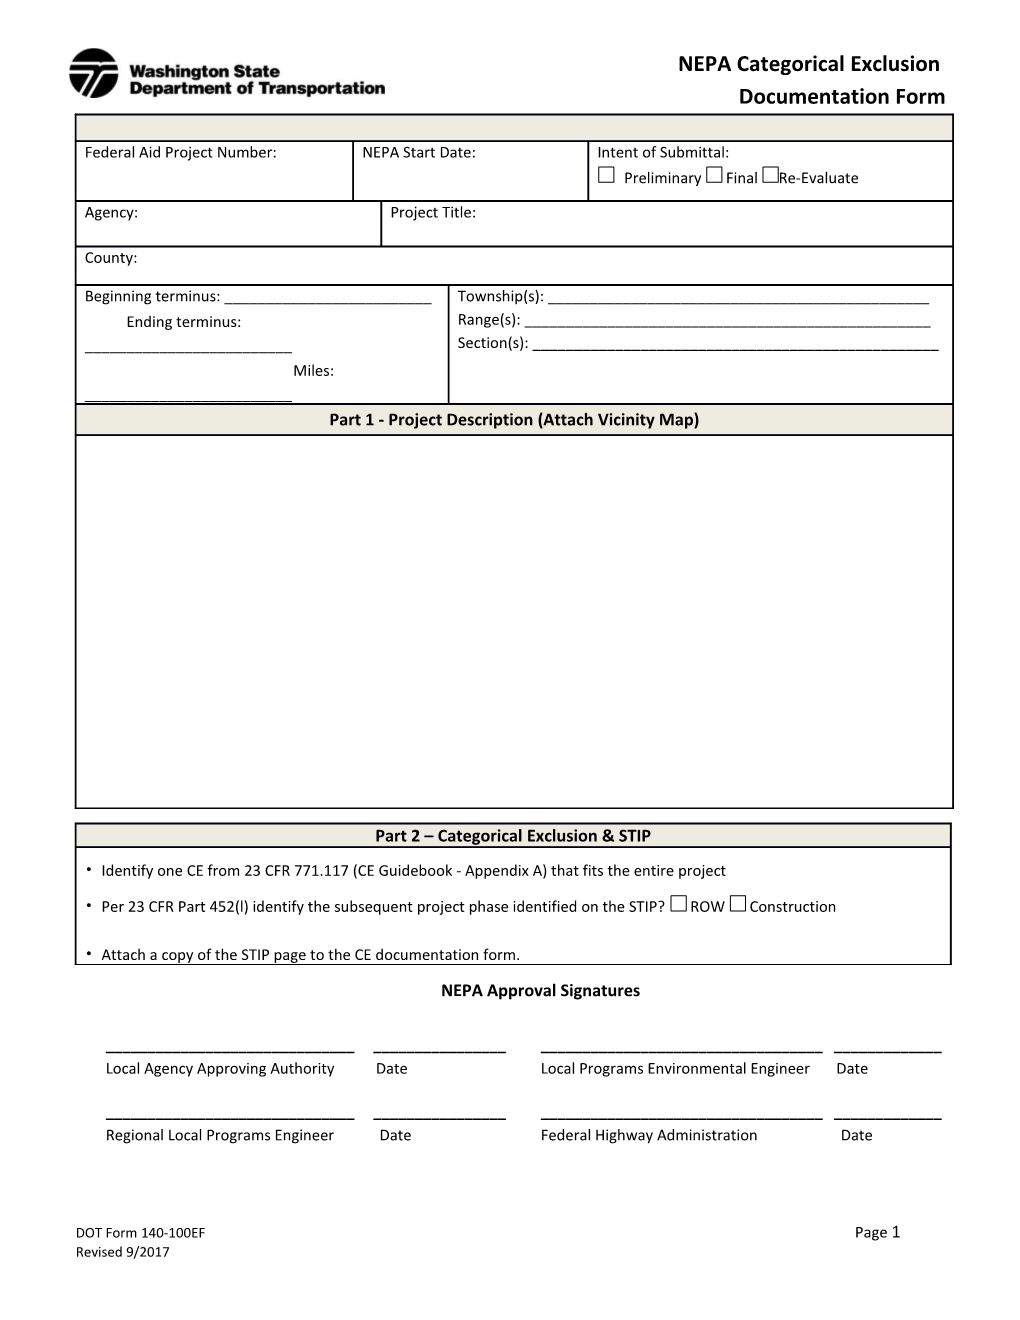 Documentation Form